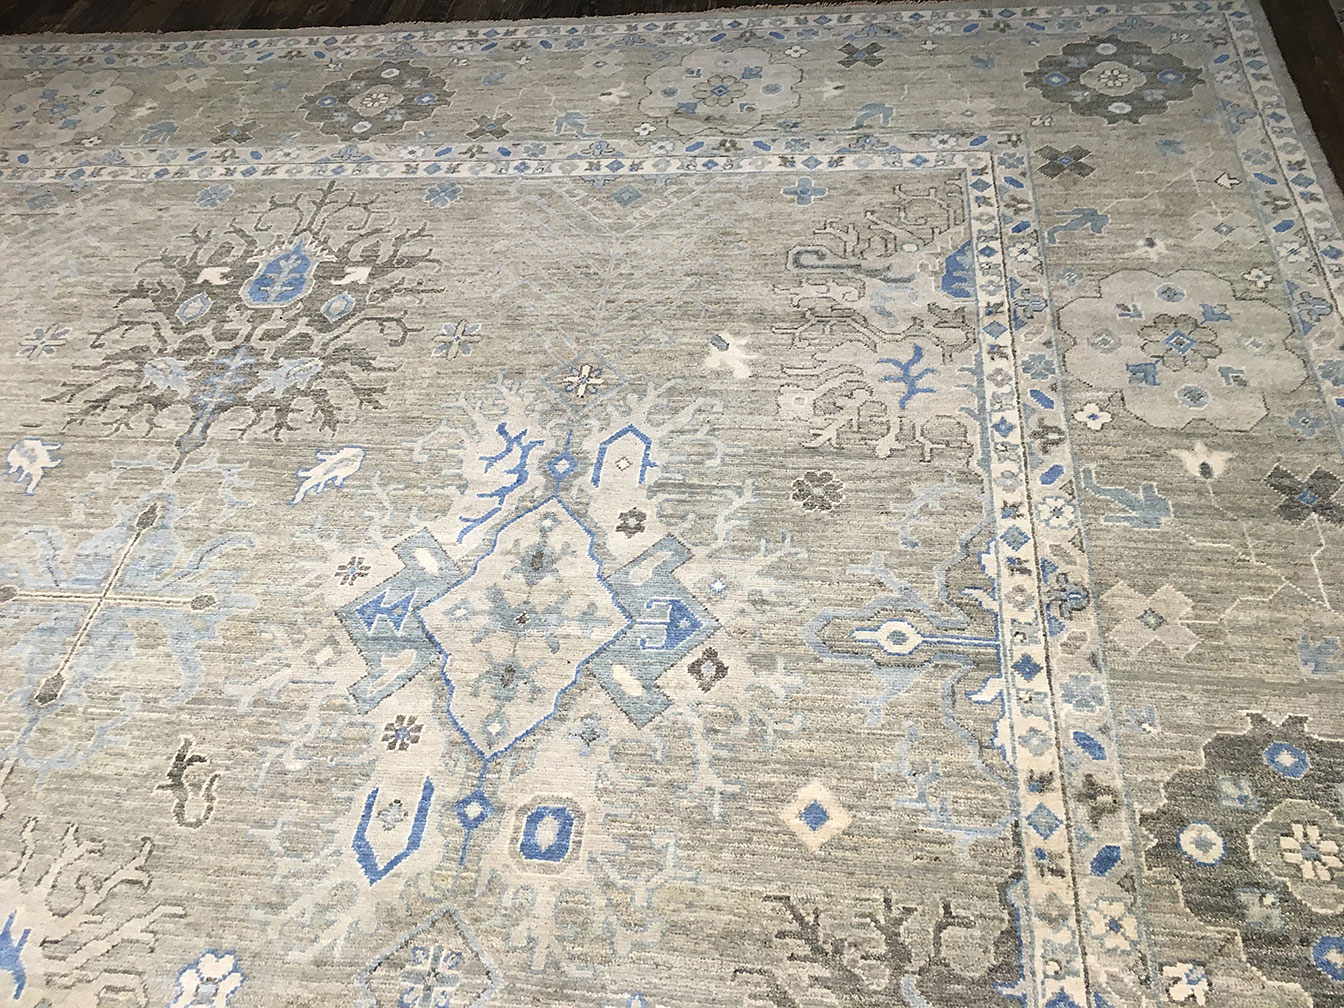 Modern tabriz Carpet - # 52170